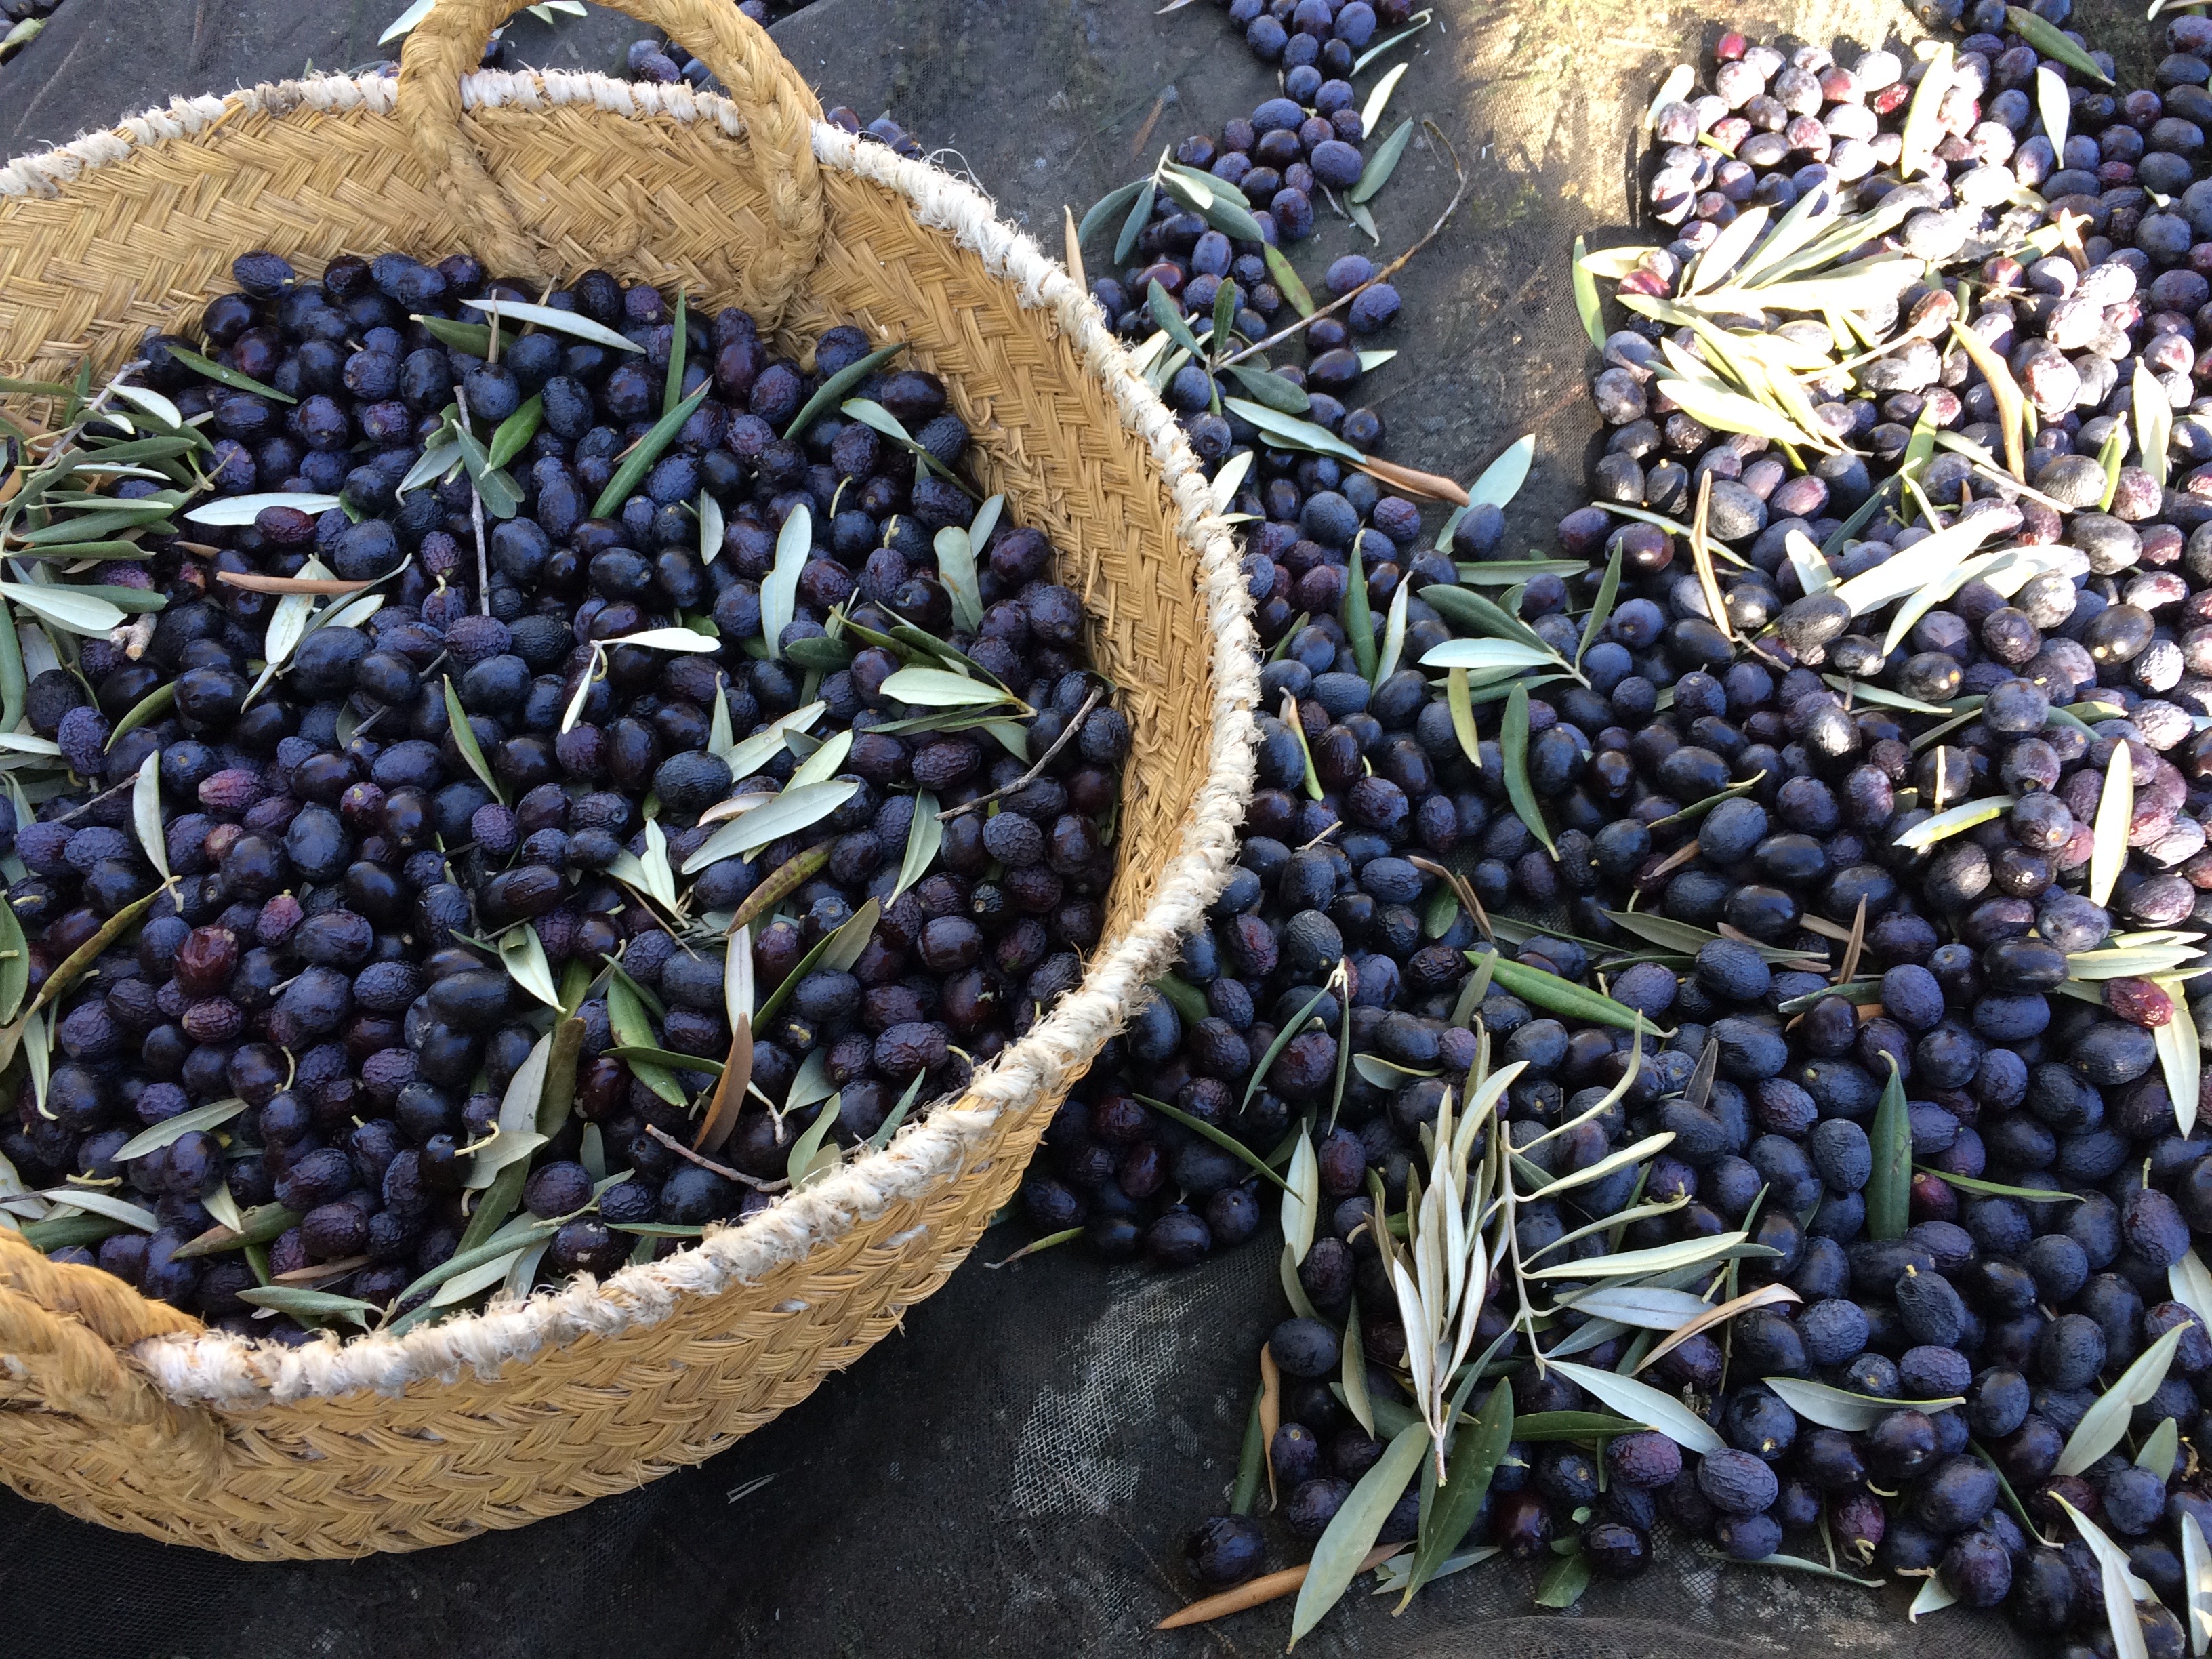 Beas de Granada - olives in basket